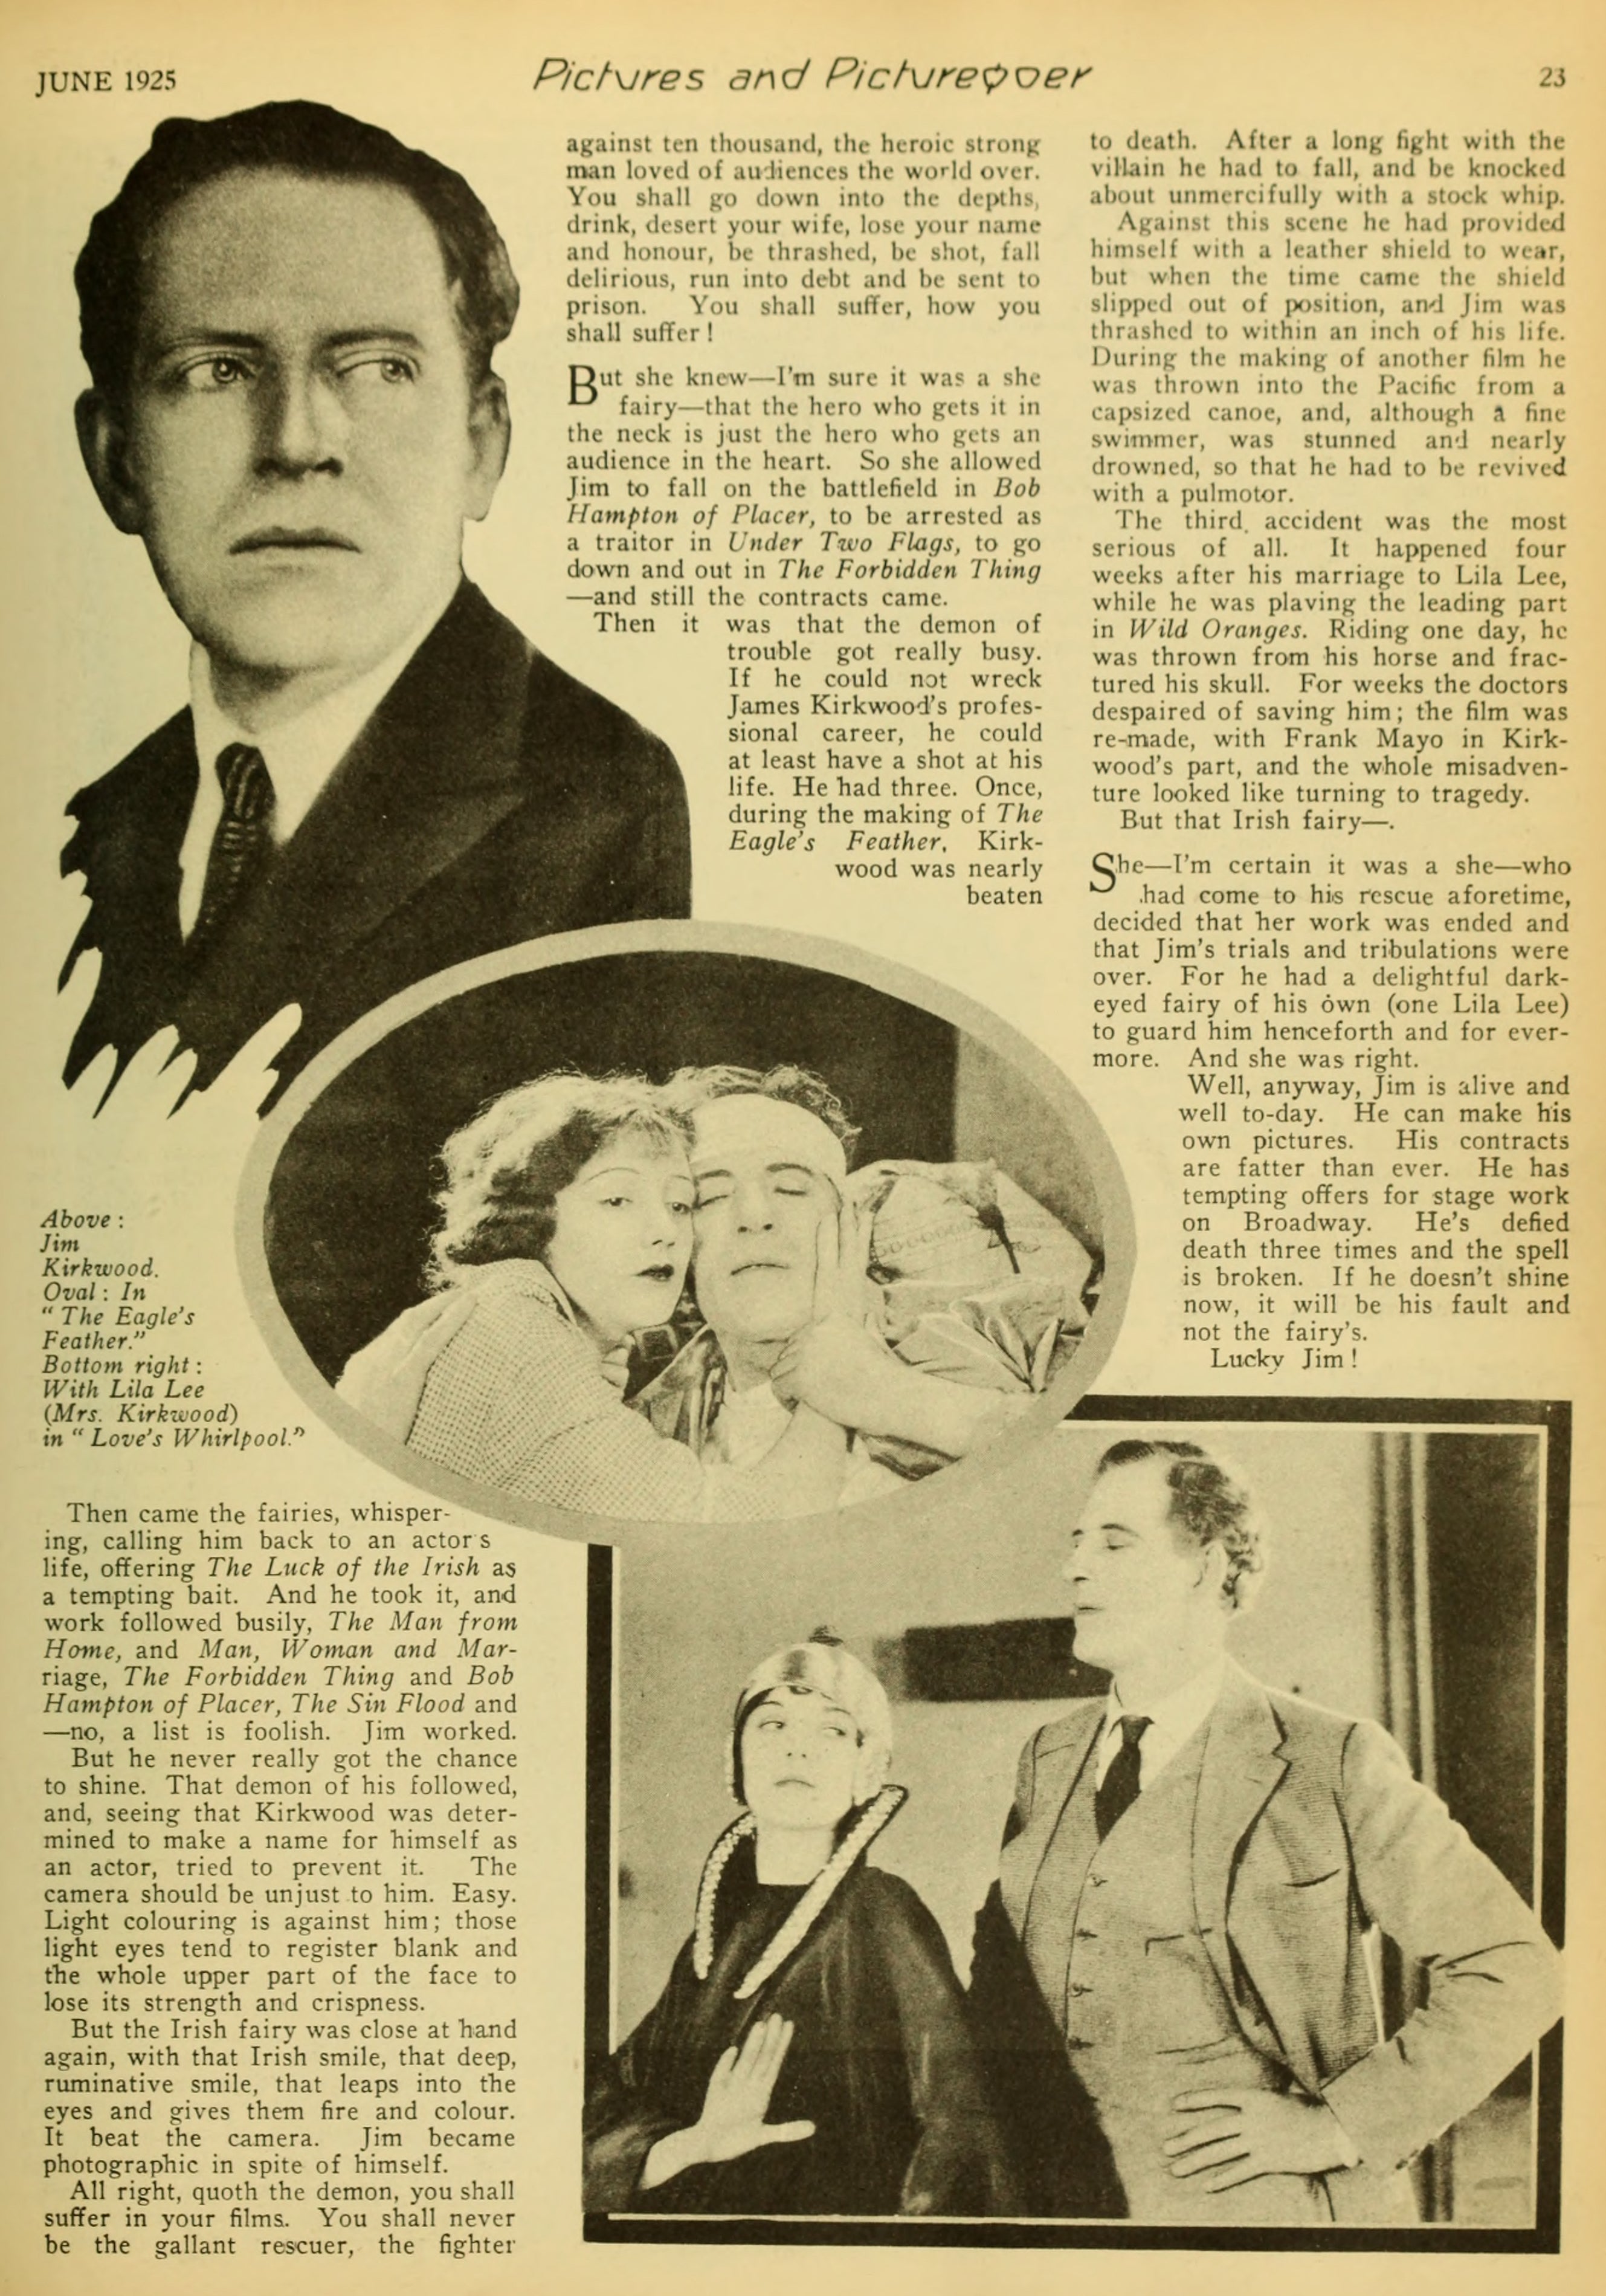 James Kirkwood — Unlucky Jim (1925) | www.vintoz.com